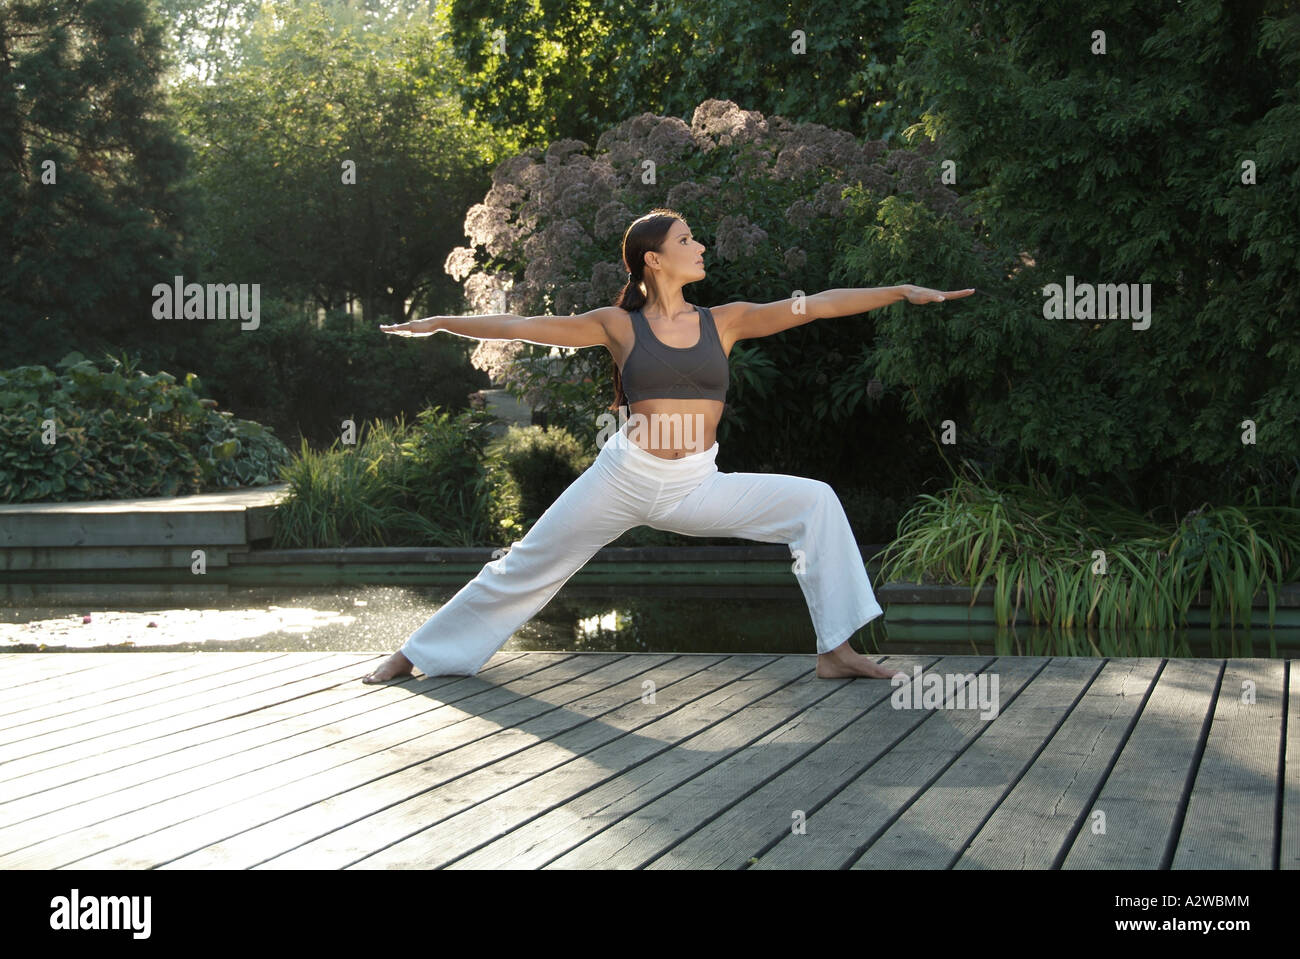 Body and Soul, Meditation, Yoga, woman Wellness leisure balance wellbeing Asana Stock Photo